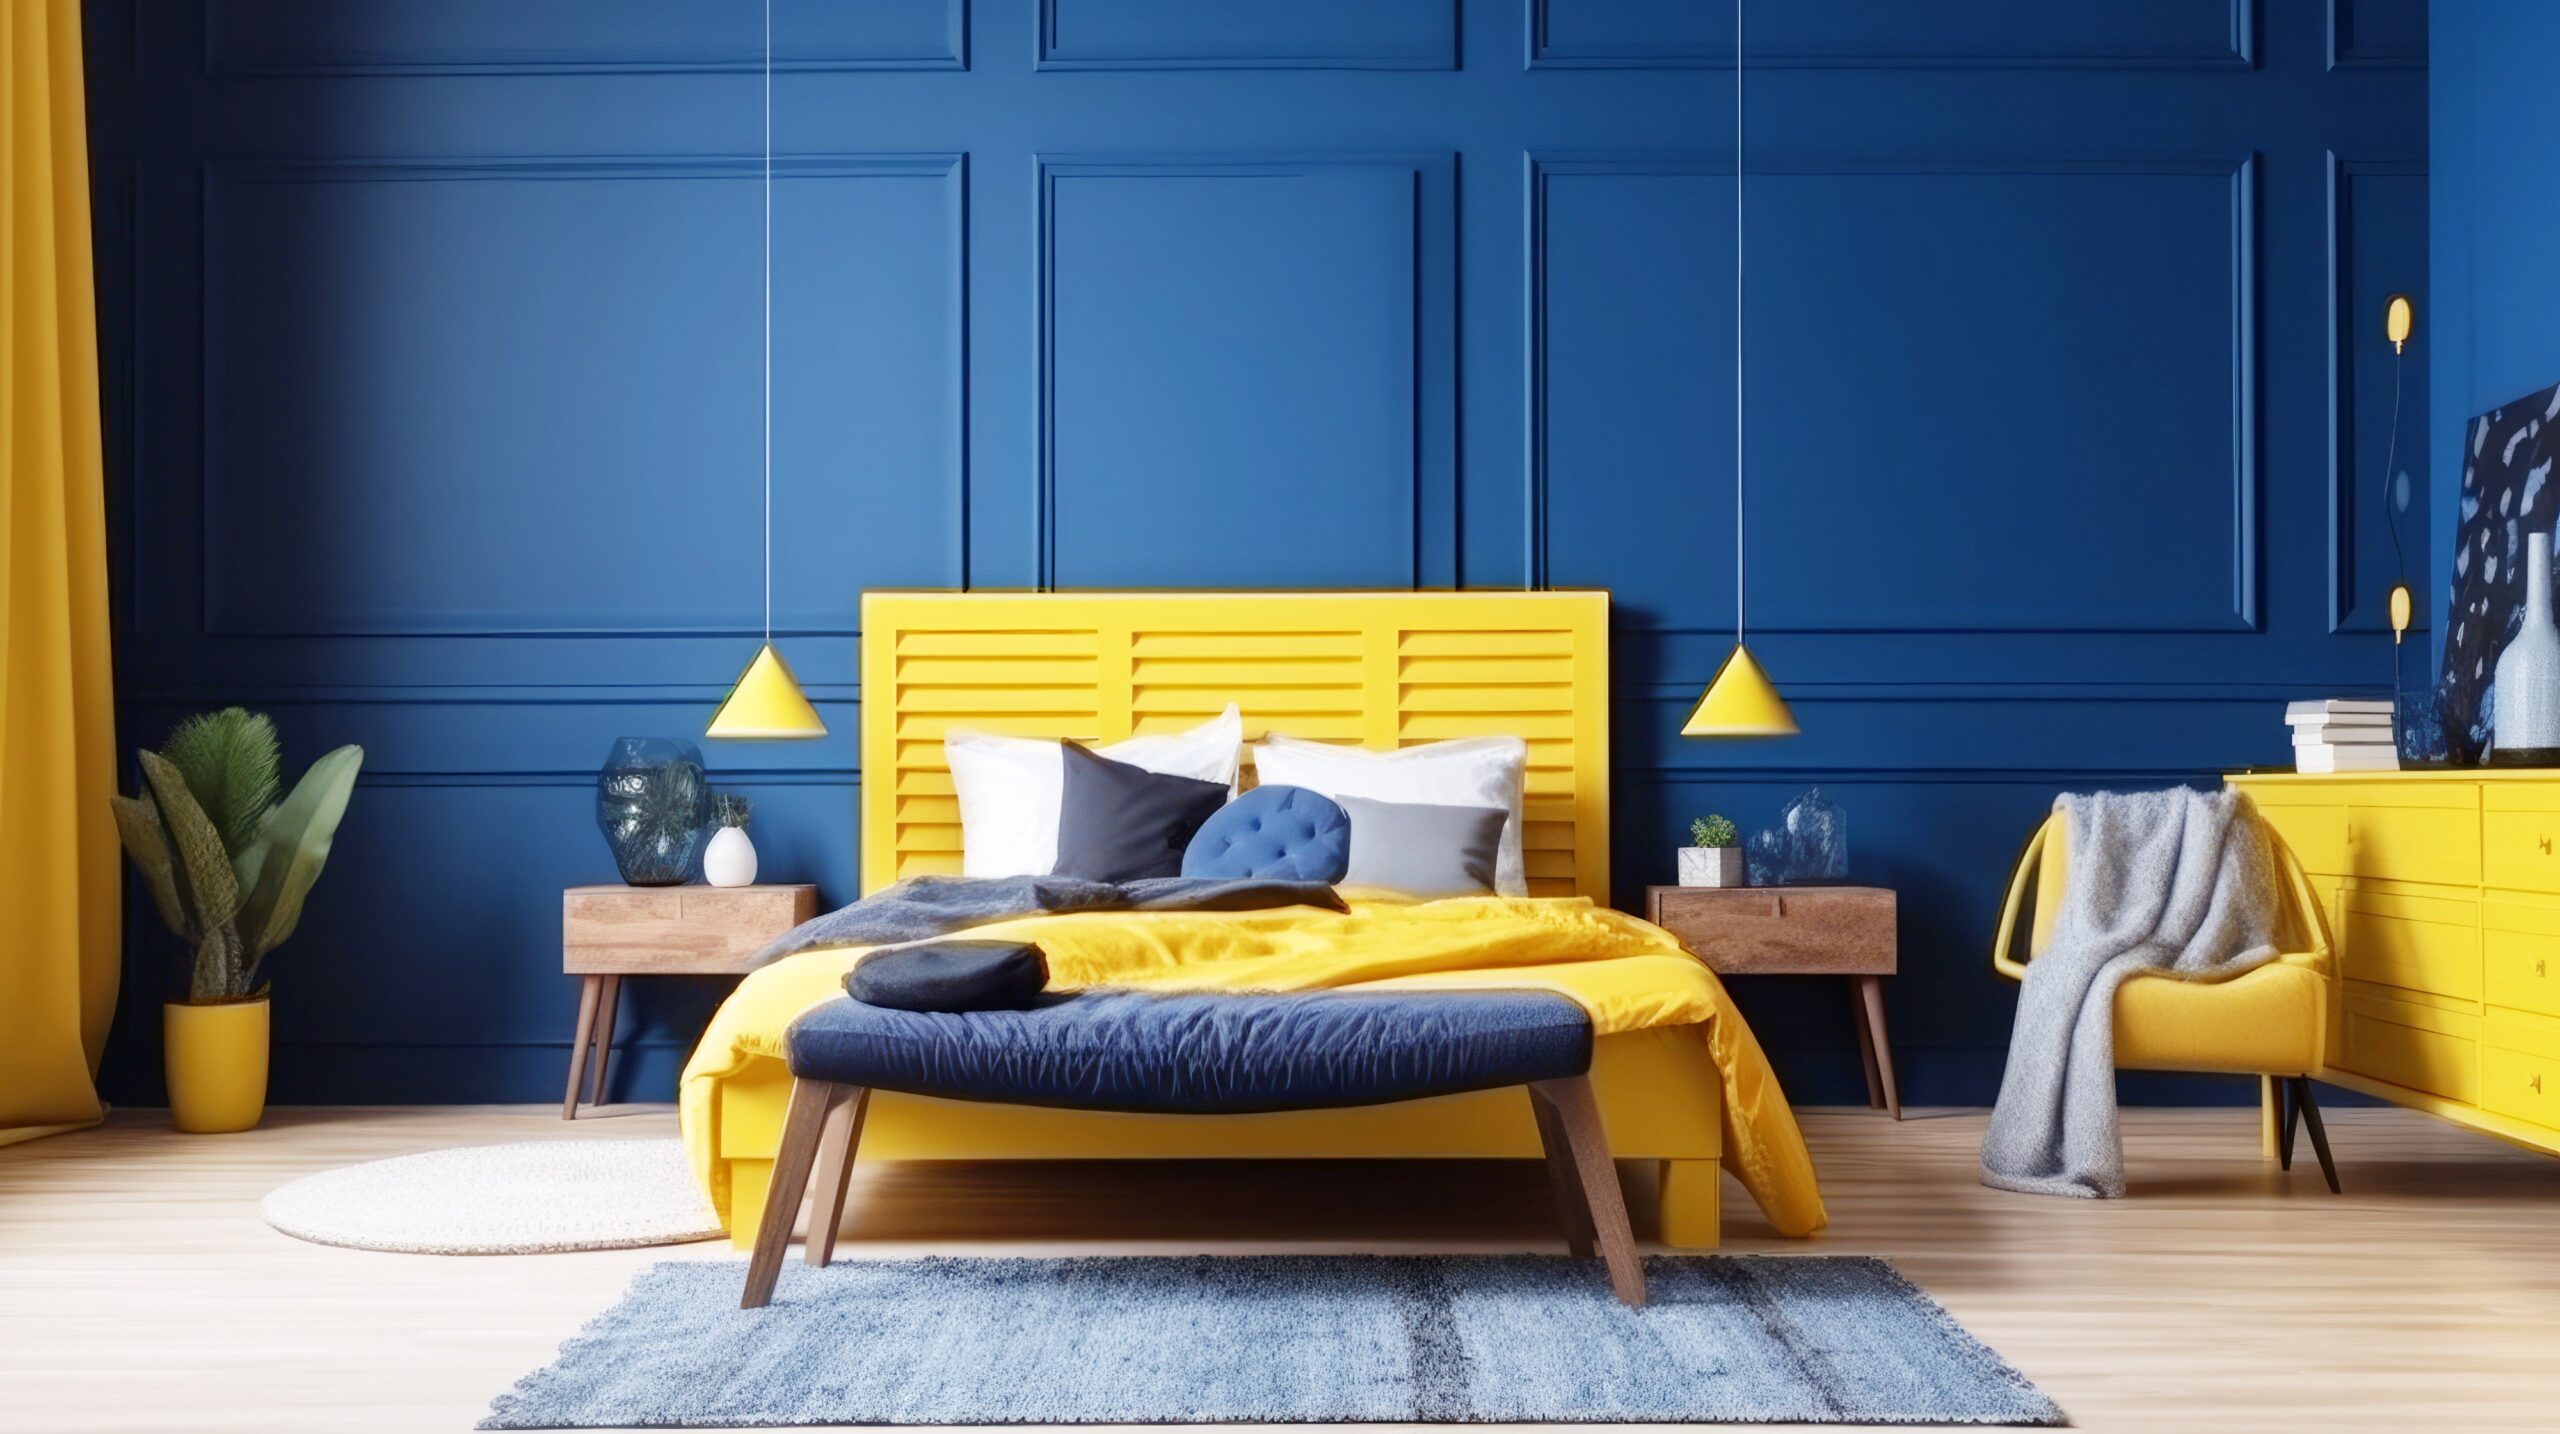 <img src="yellow.jpg" alt="yellow and blue scandinavian bedroom"/>